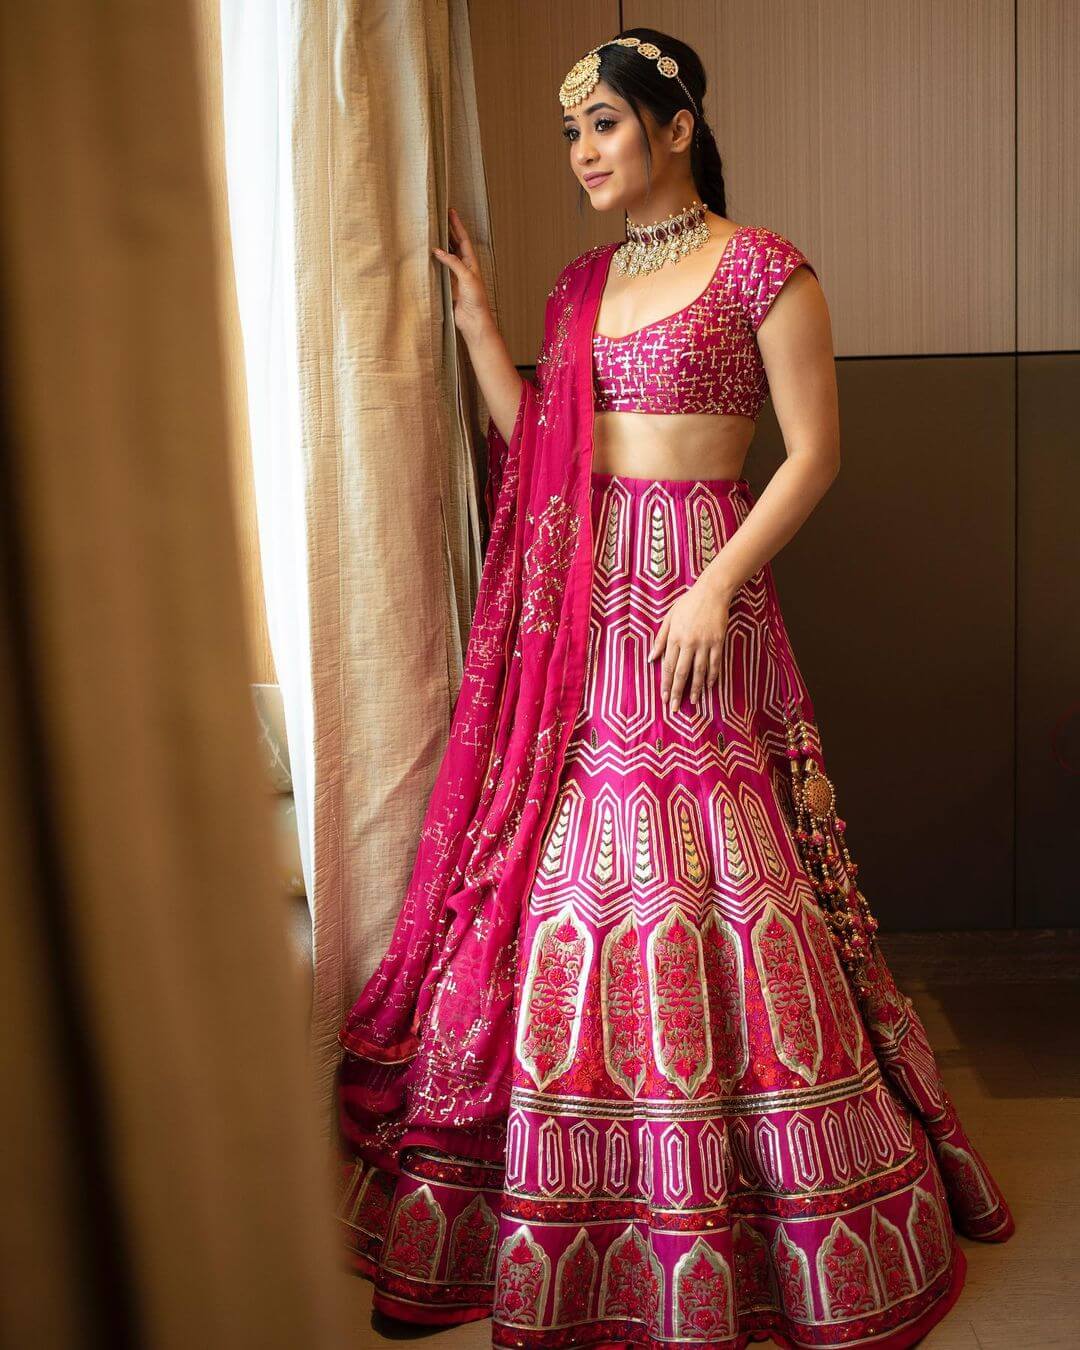 Shivangi Joshi Look Pretty In Gorgeous Pink Lehenga Outfit With Matta Patti